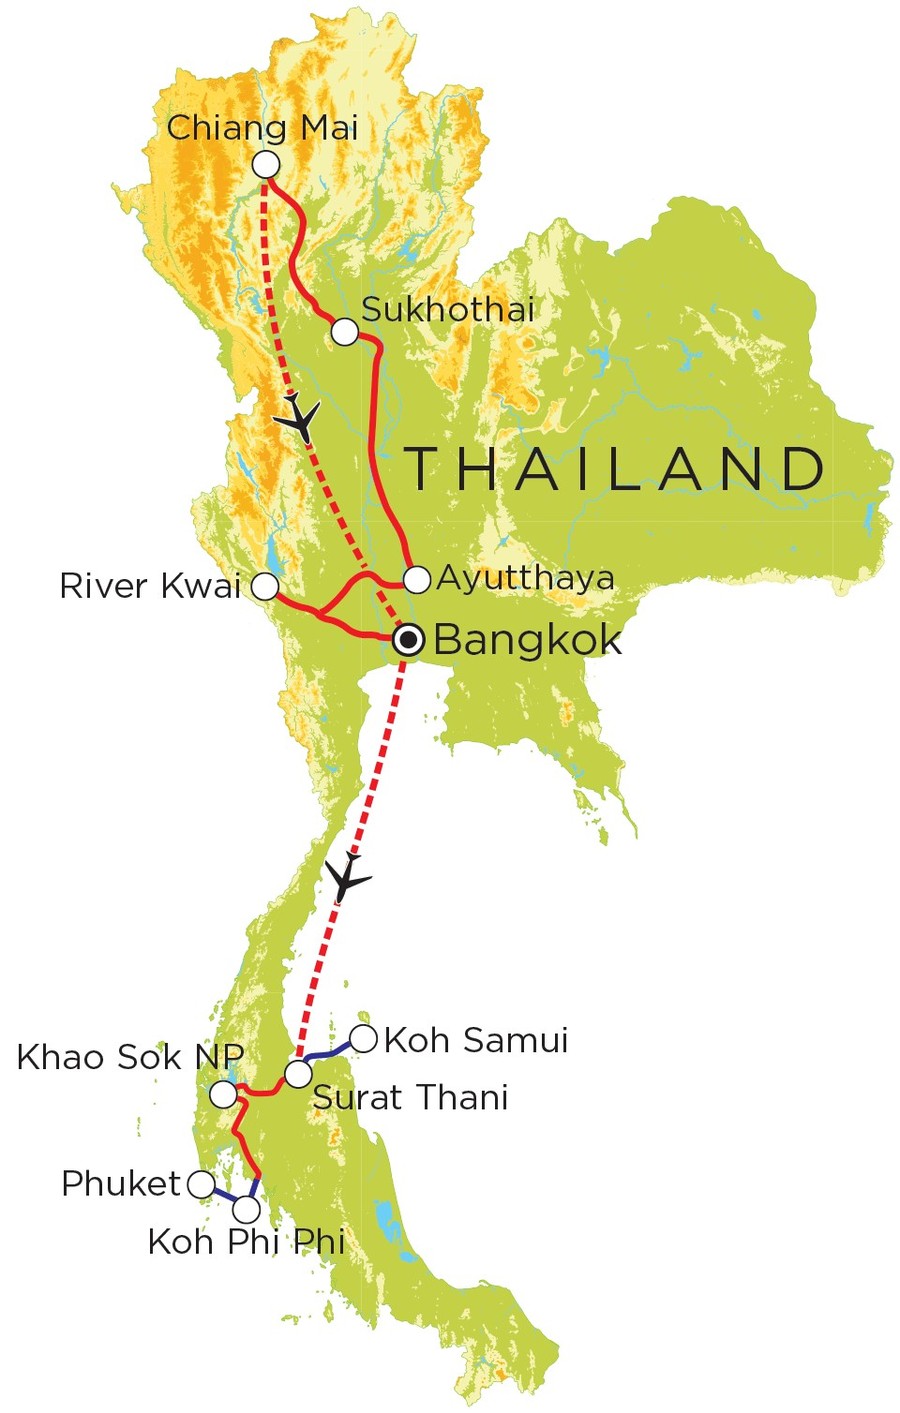 Routekaart Thailand Noord & Zuid, 21 dagen